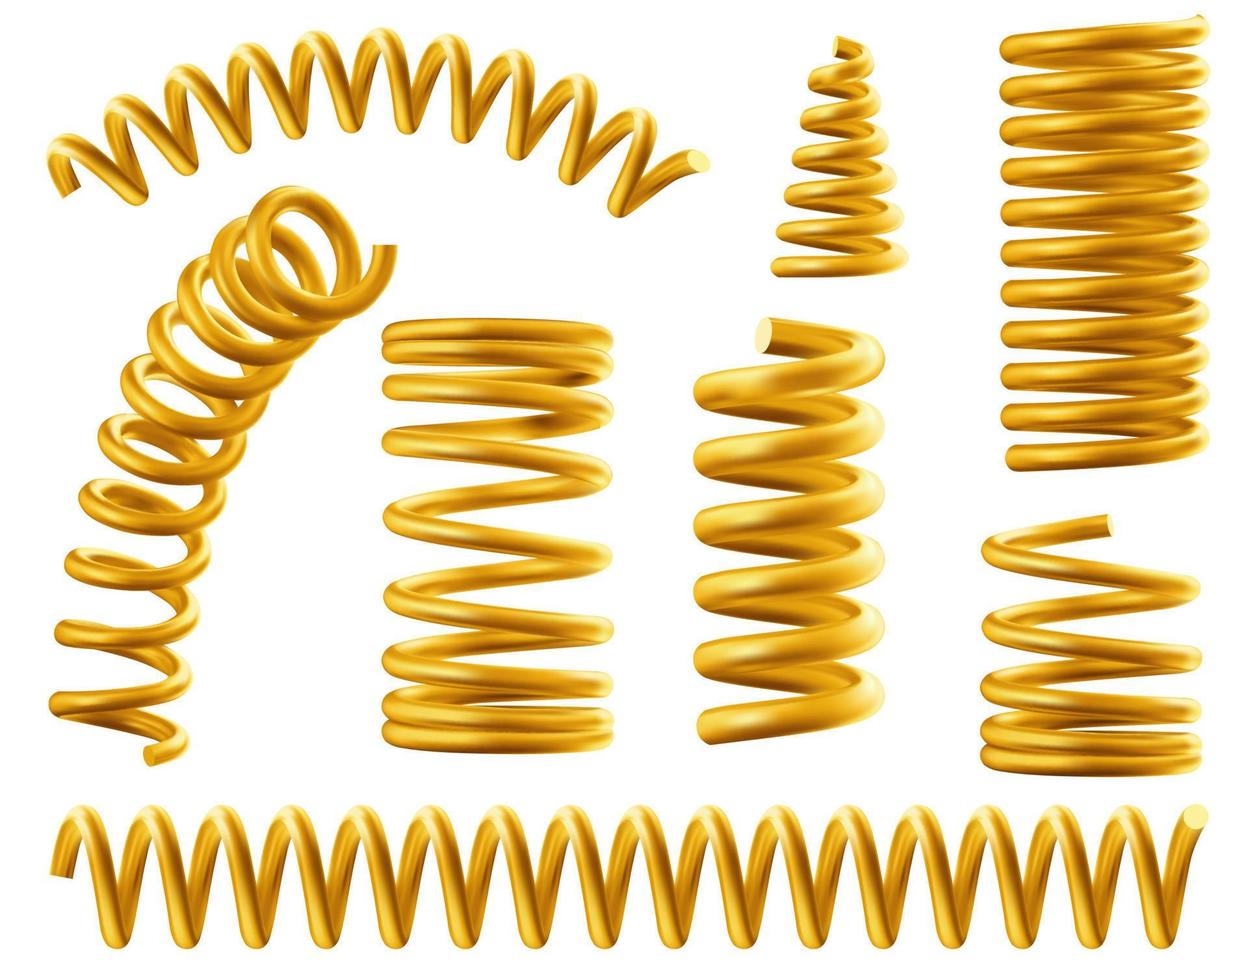 Gold spring coils, flexible spiral metal wire vector